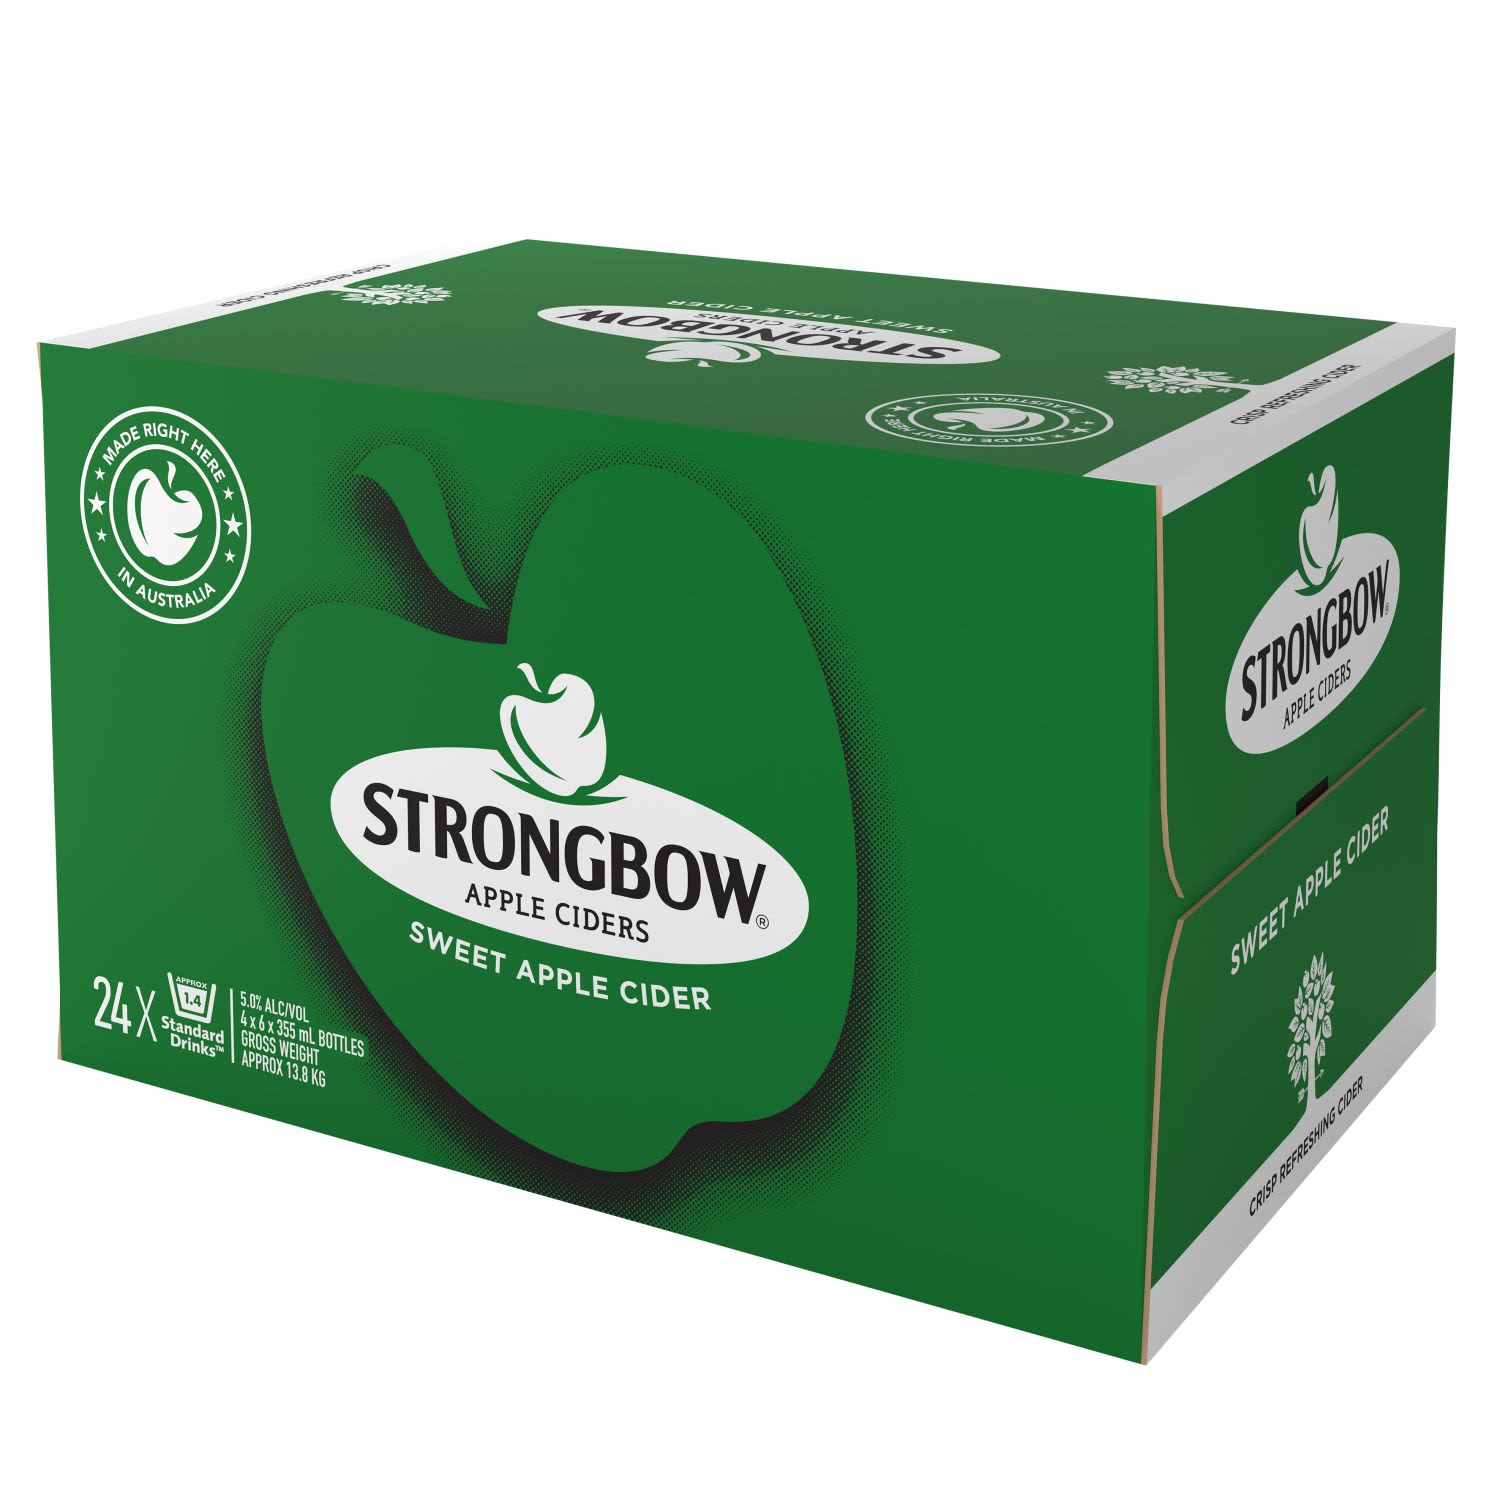 Strongbow Sweet Apple Cider Bottle 355mL 24 Pack